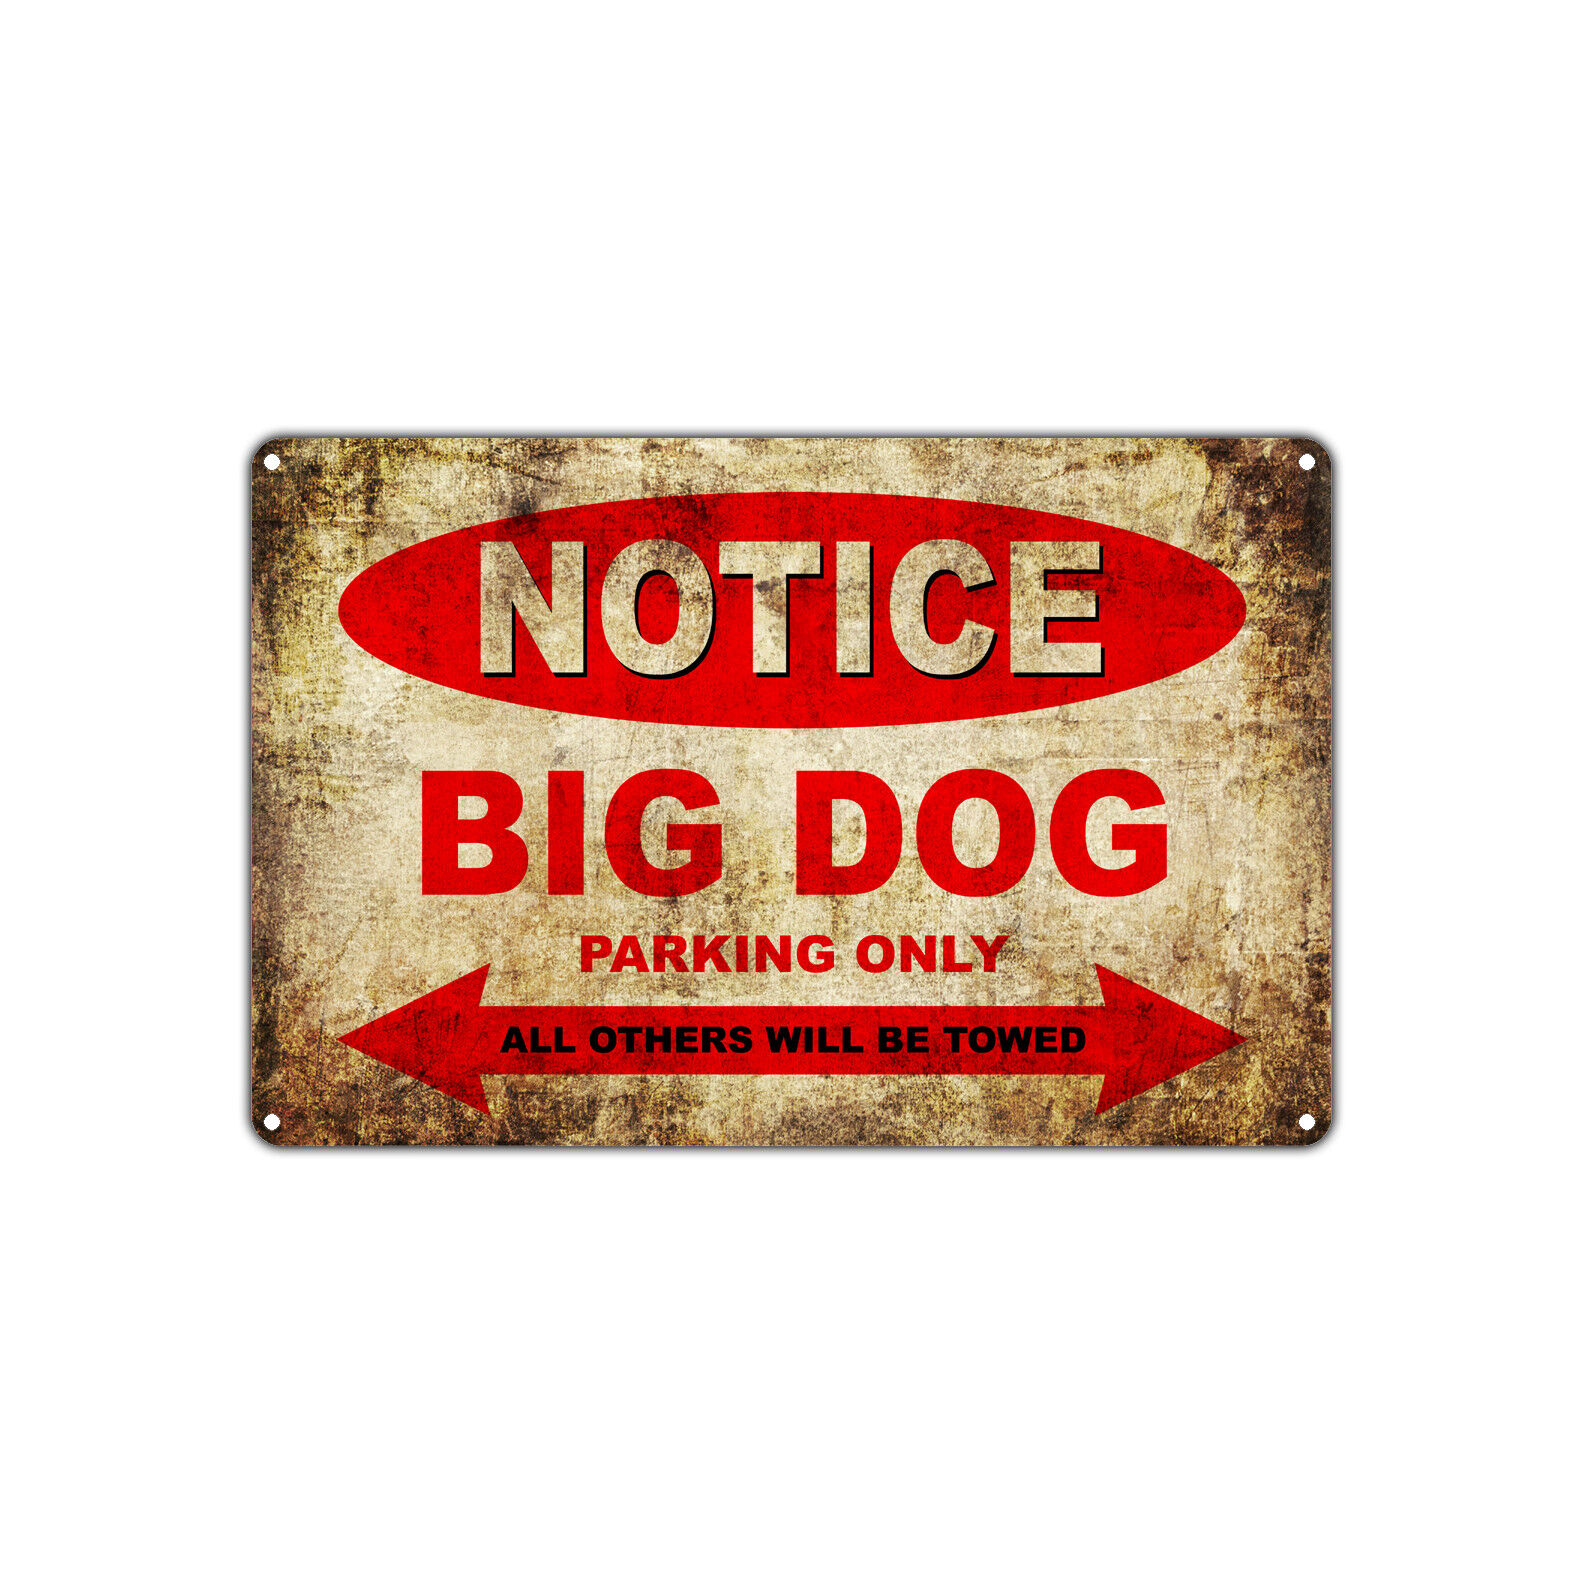 BIG DOG Motorcycles Parking Sign Vintage Retro Metal Decor Art Shop Man Cave Bar